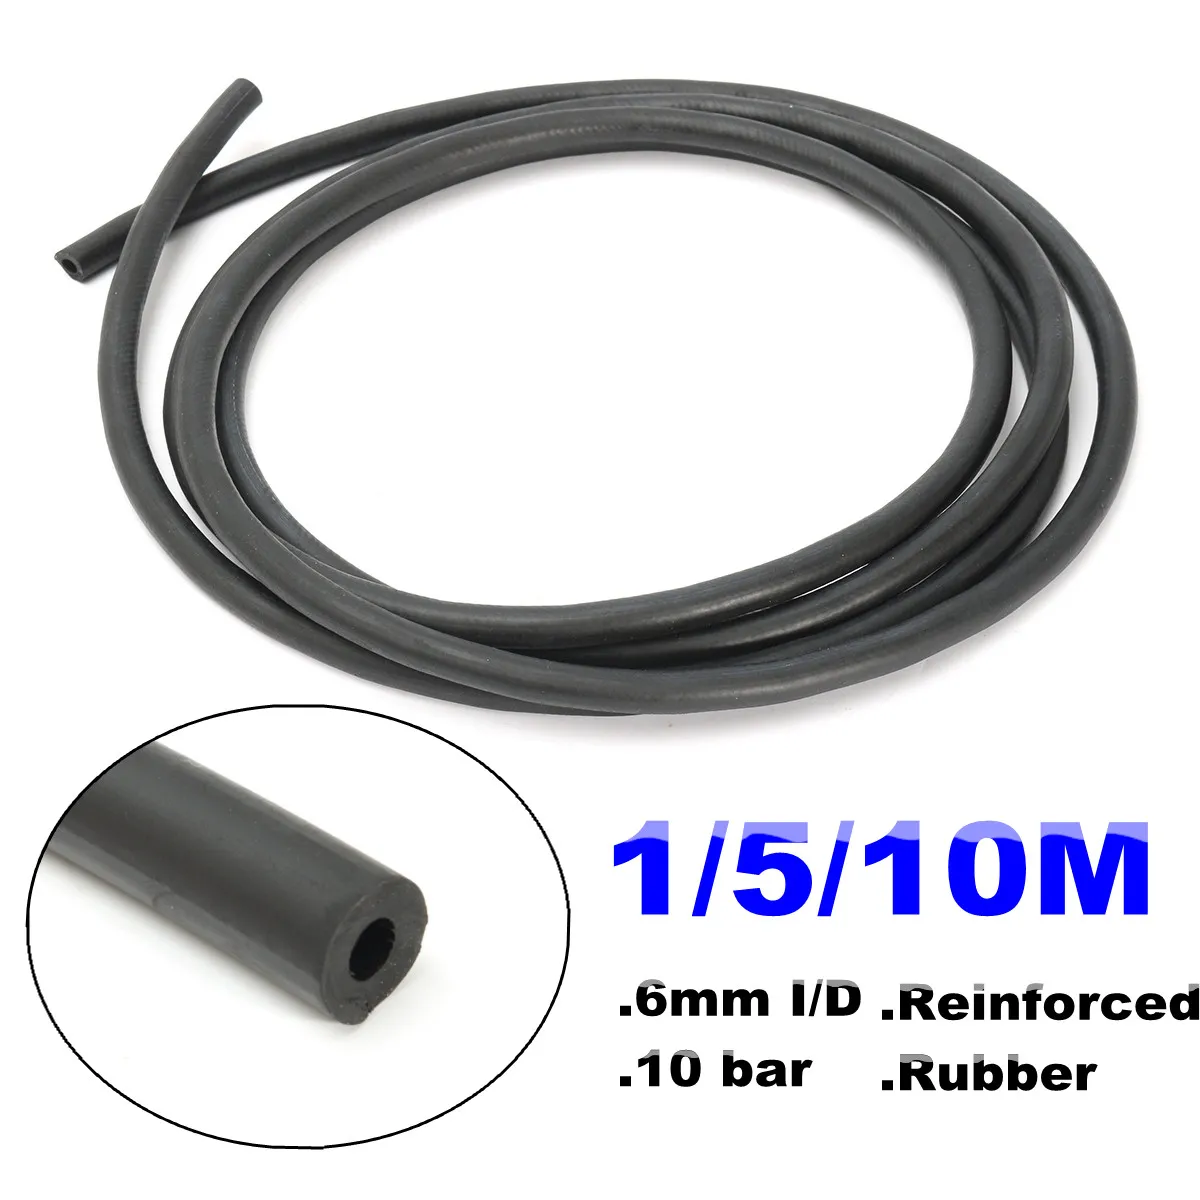 

1m 5m 10m ID 6mm Rubber Reinforced Fuel Hose Tube Pipe Line Black for Petrol Oil for Diesel 10 bar